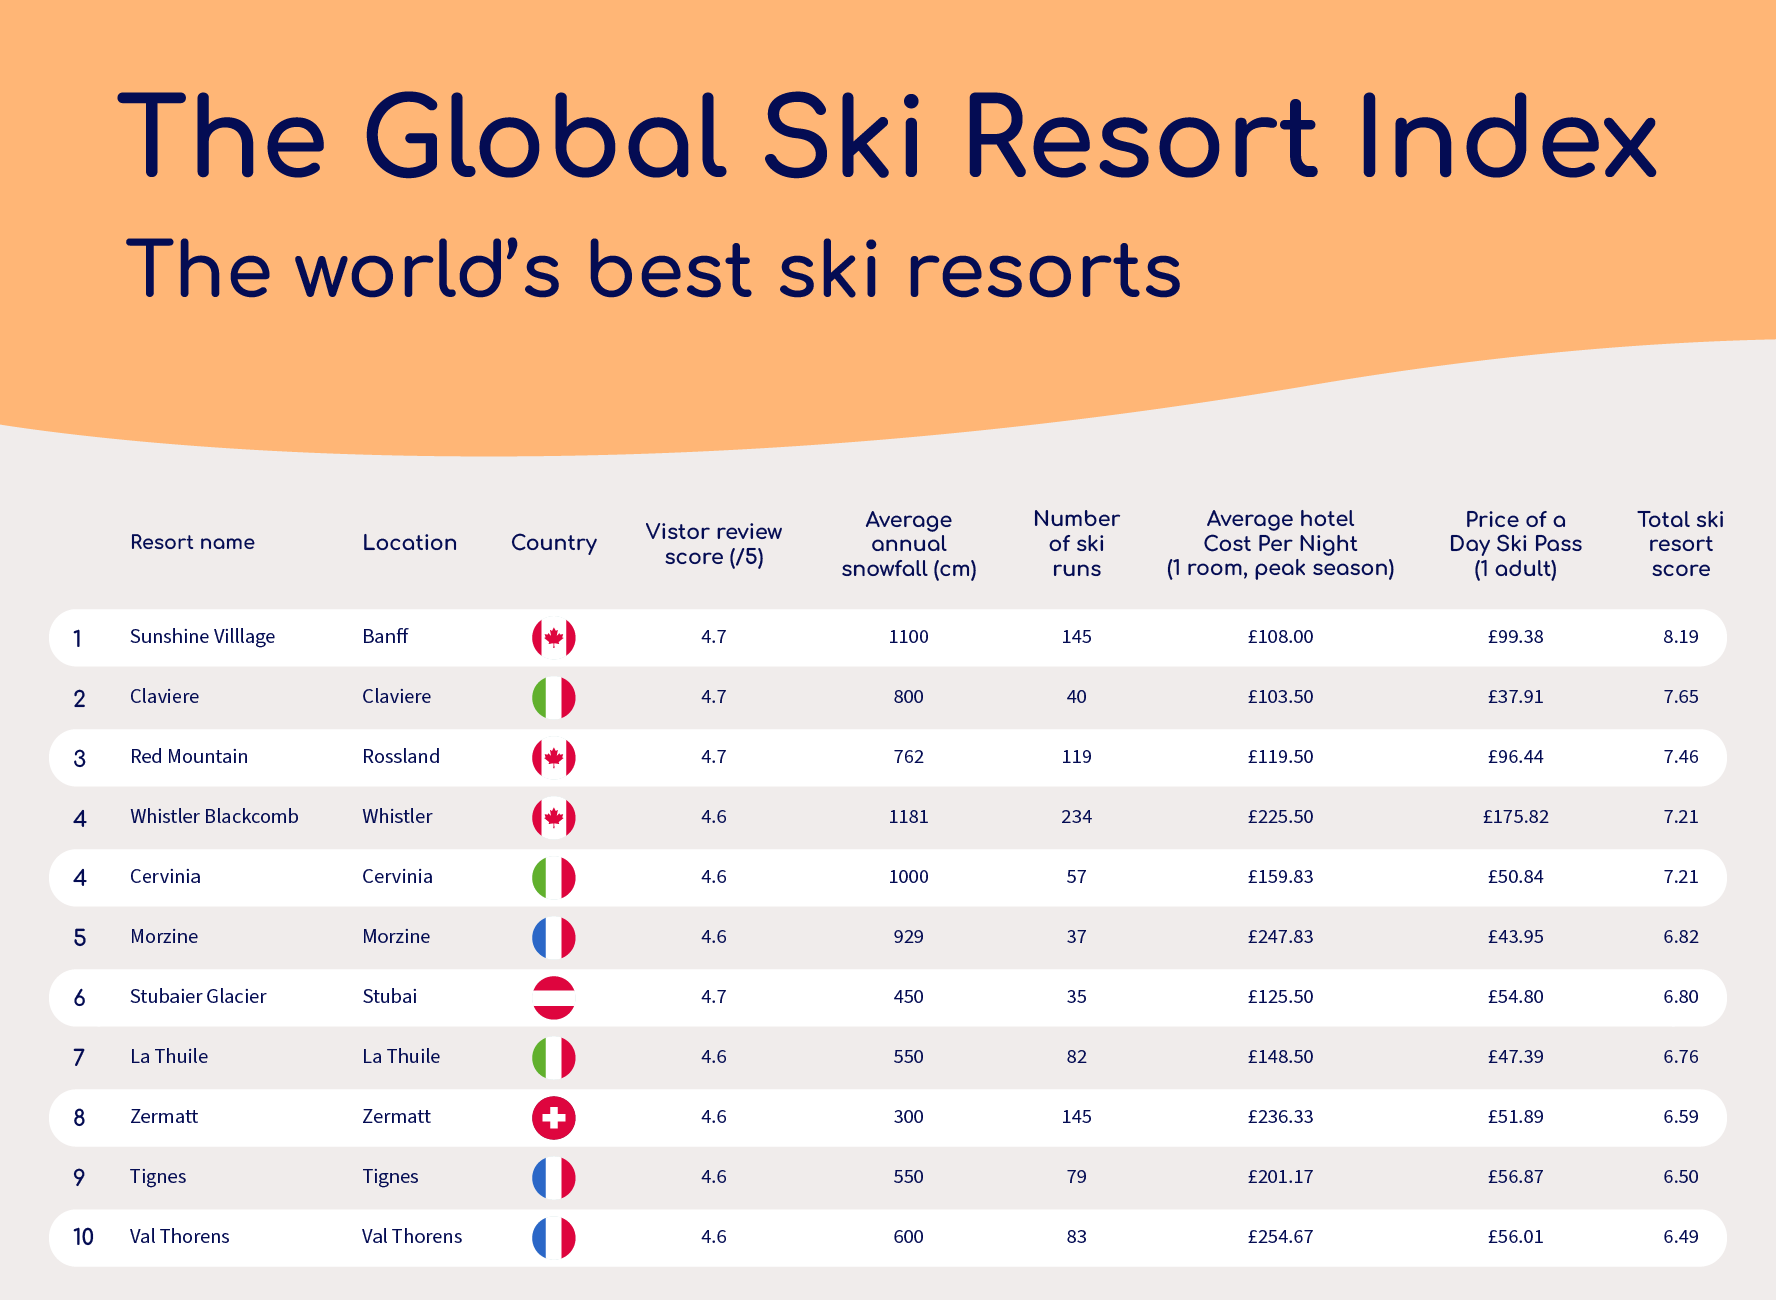 The Global Ski Resort Index